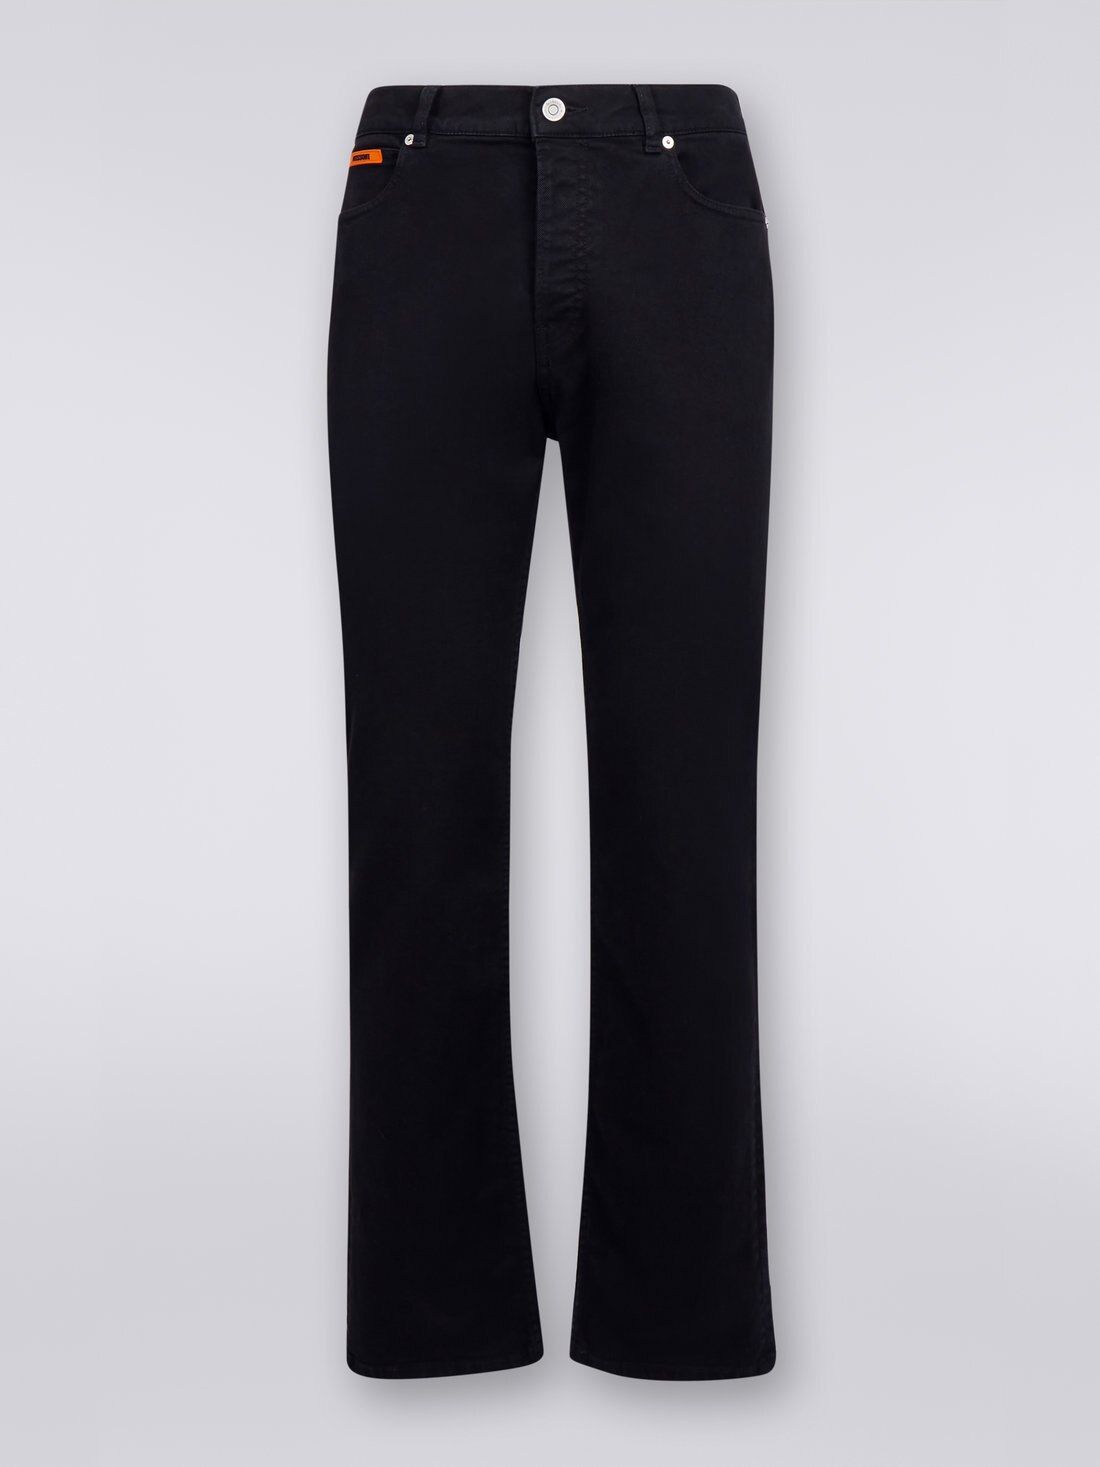 Denim five-pocket trousers with chevron inserts, Black    - US23WI0FBW00KW93911 - 0